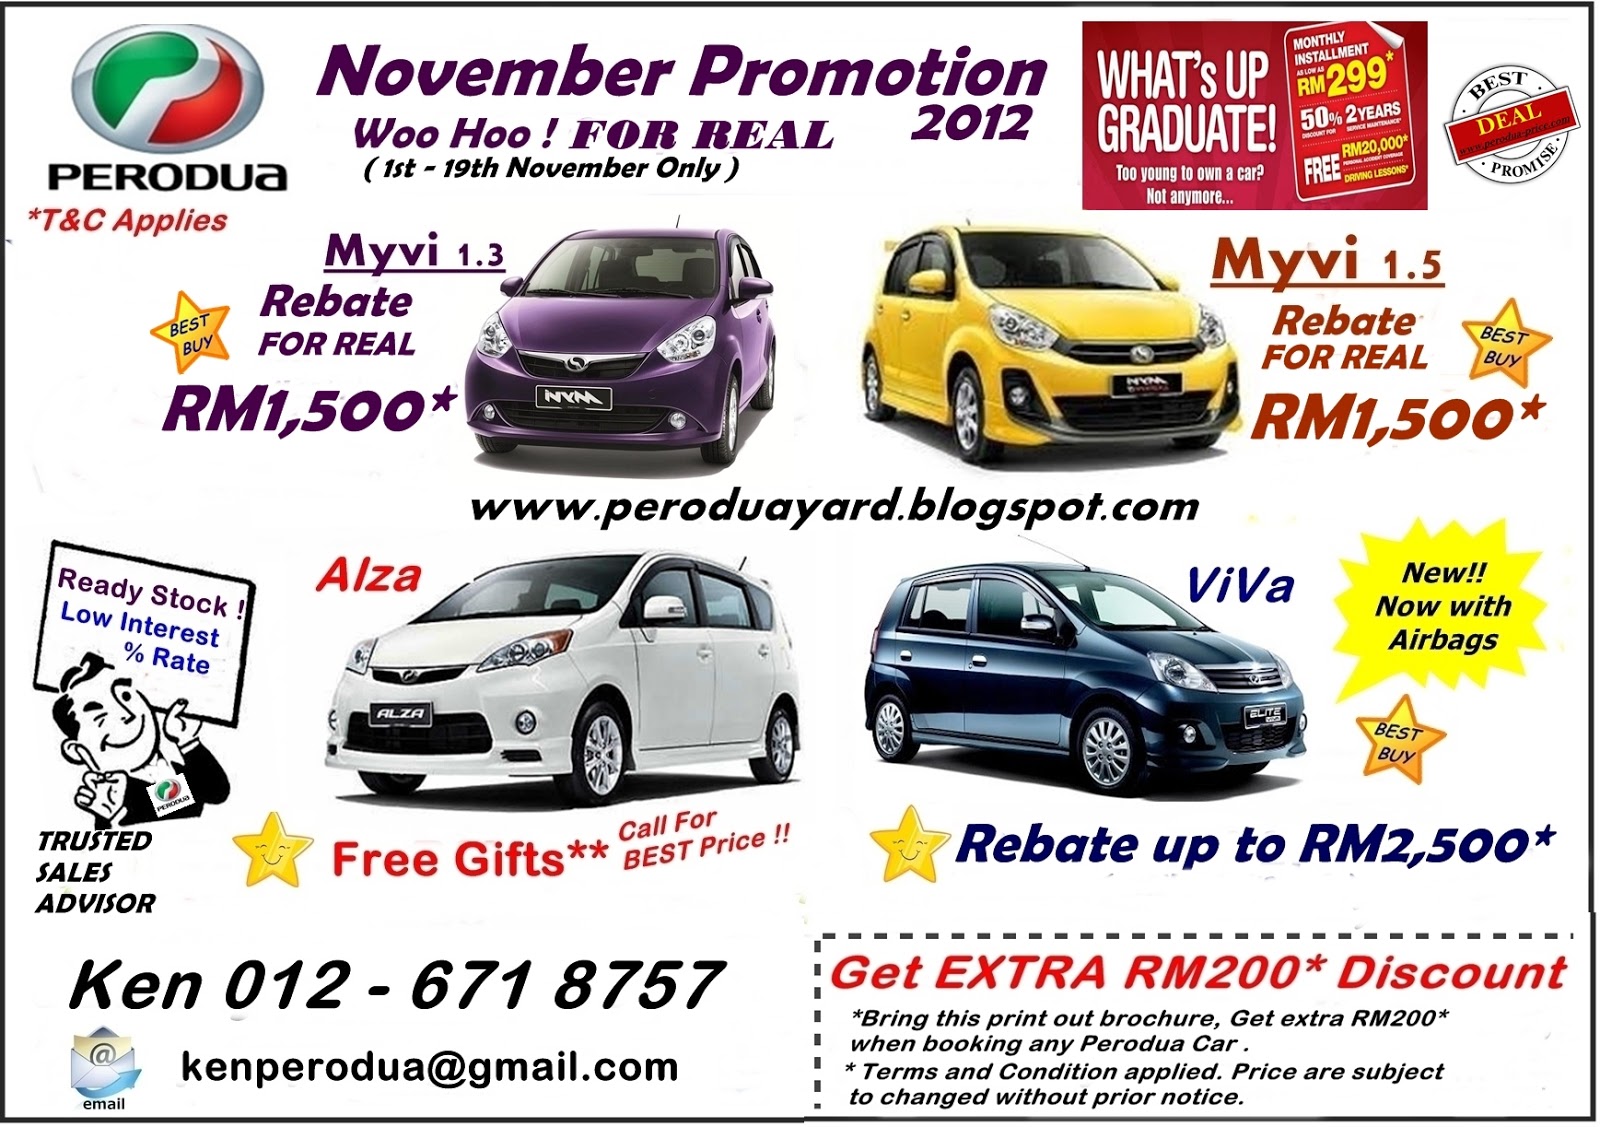 Perodua Viva Elite Price 2012 - Kerja Kerja m